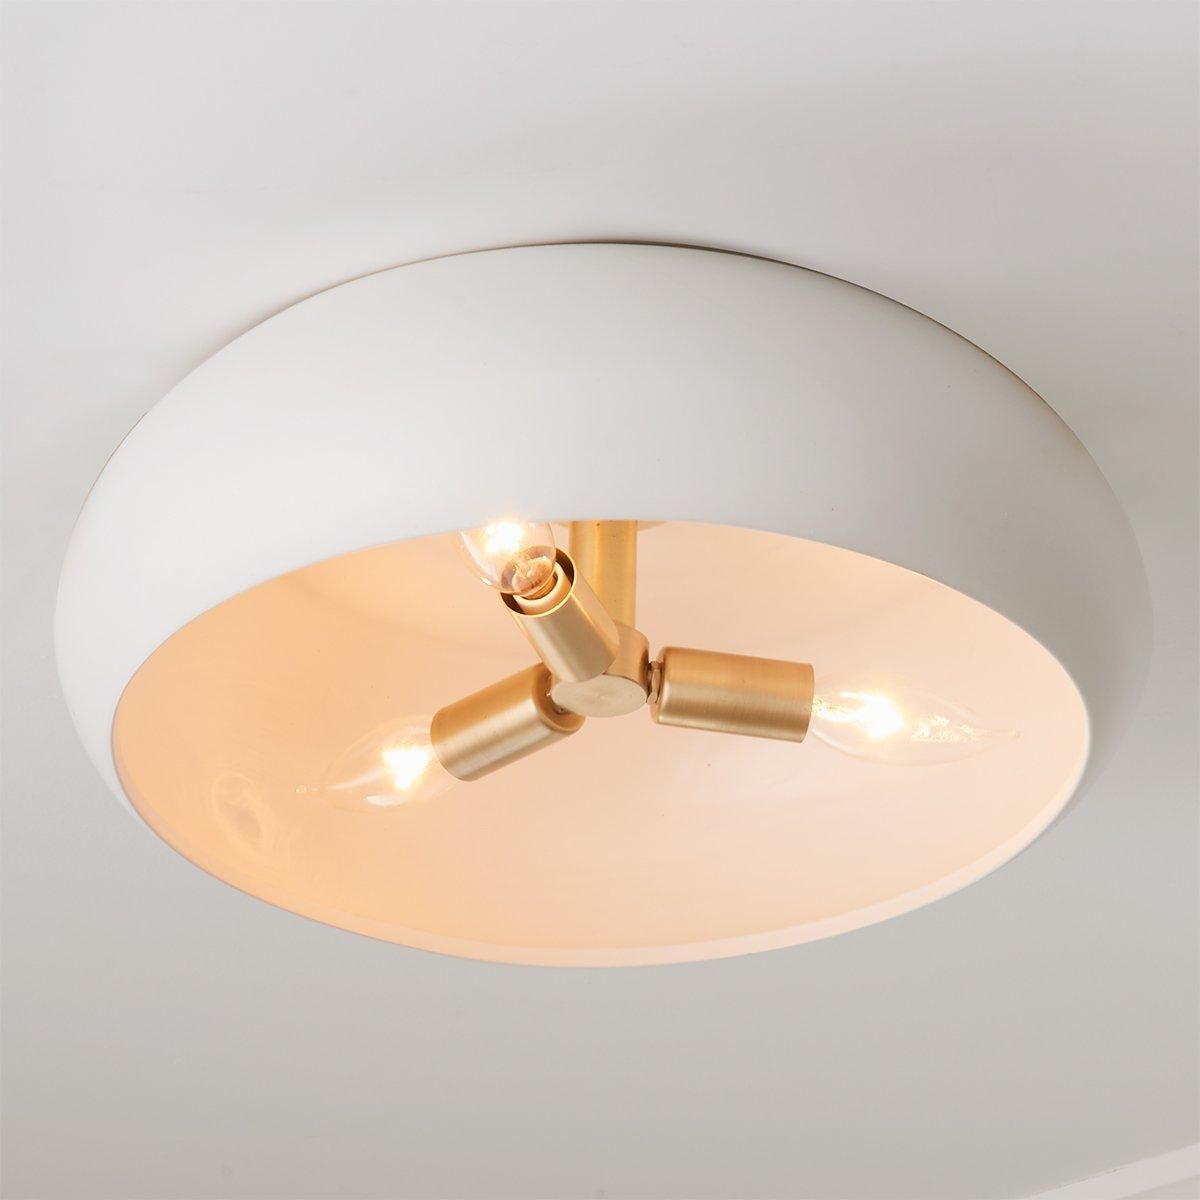 Soft Ceramic Ceiling Light - 3 Light | Shades of Light